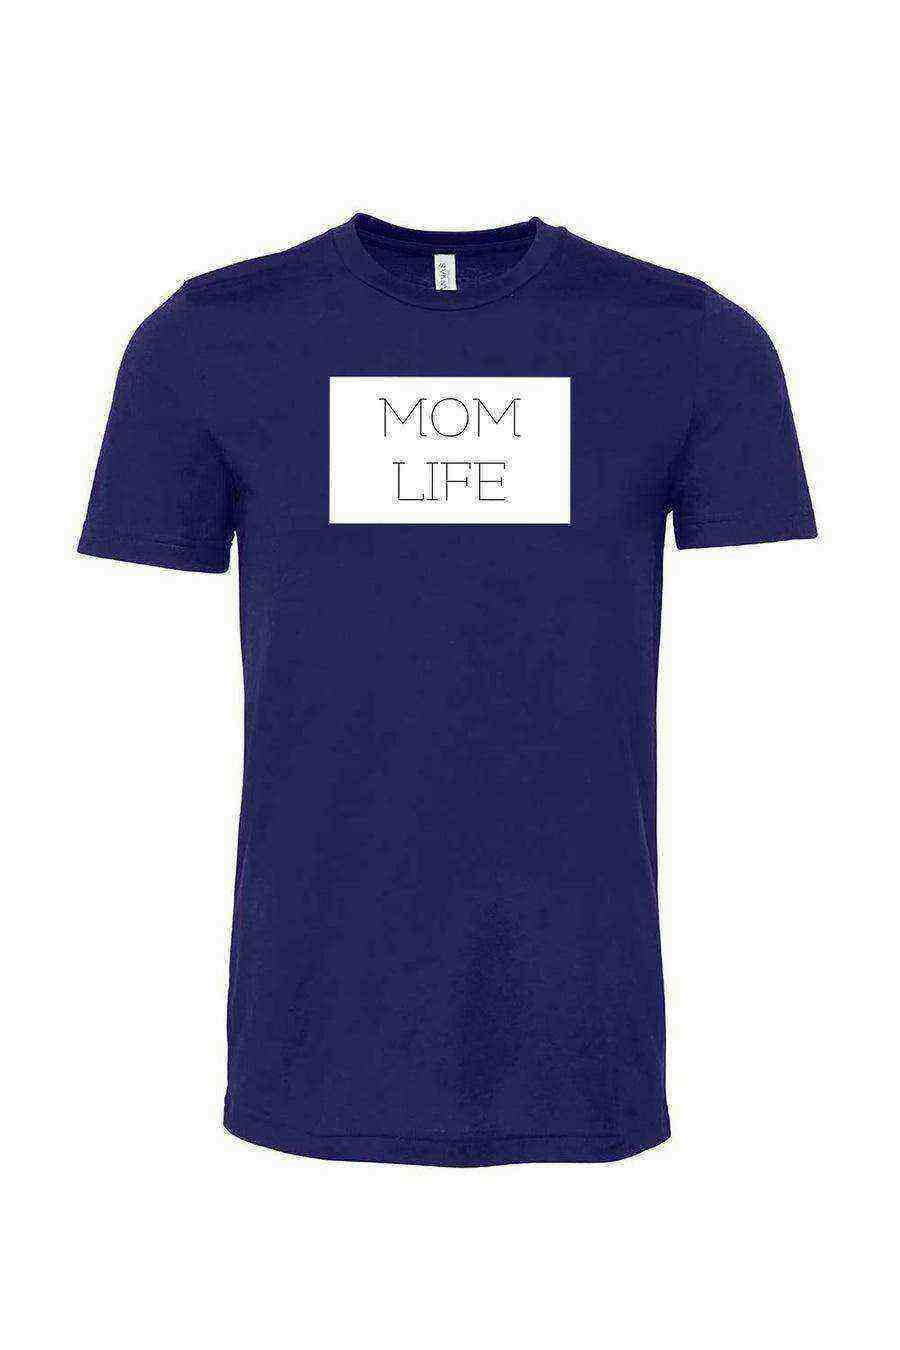 Toddler | Mom Life Shirt - Dylan's Tees